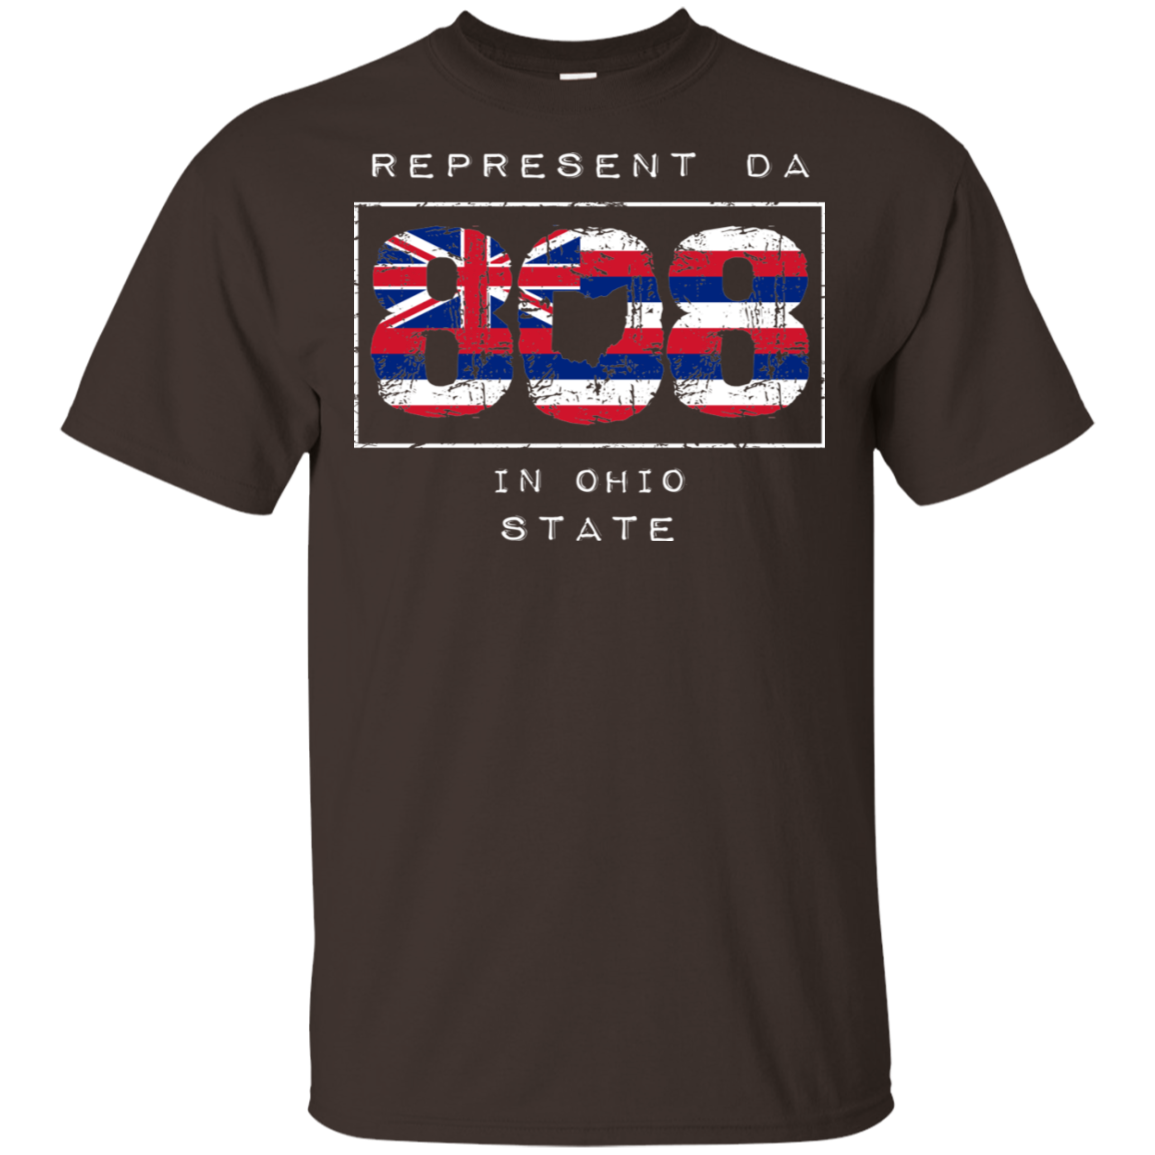 Rep Da 808 In Ohio State Ultra Cotton T-Shirt, T-Shirts, Hawaii Nei All Day